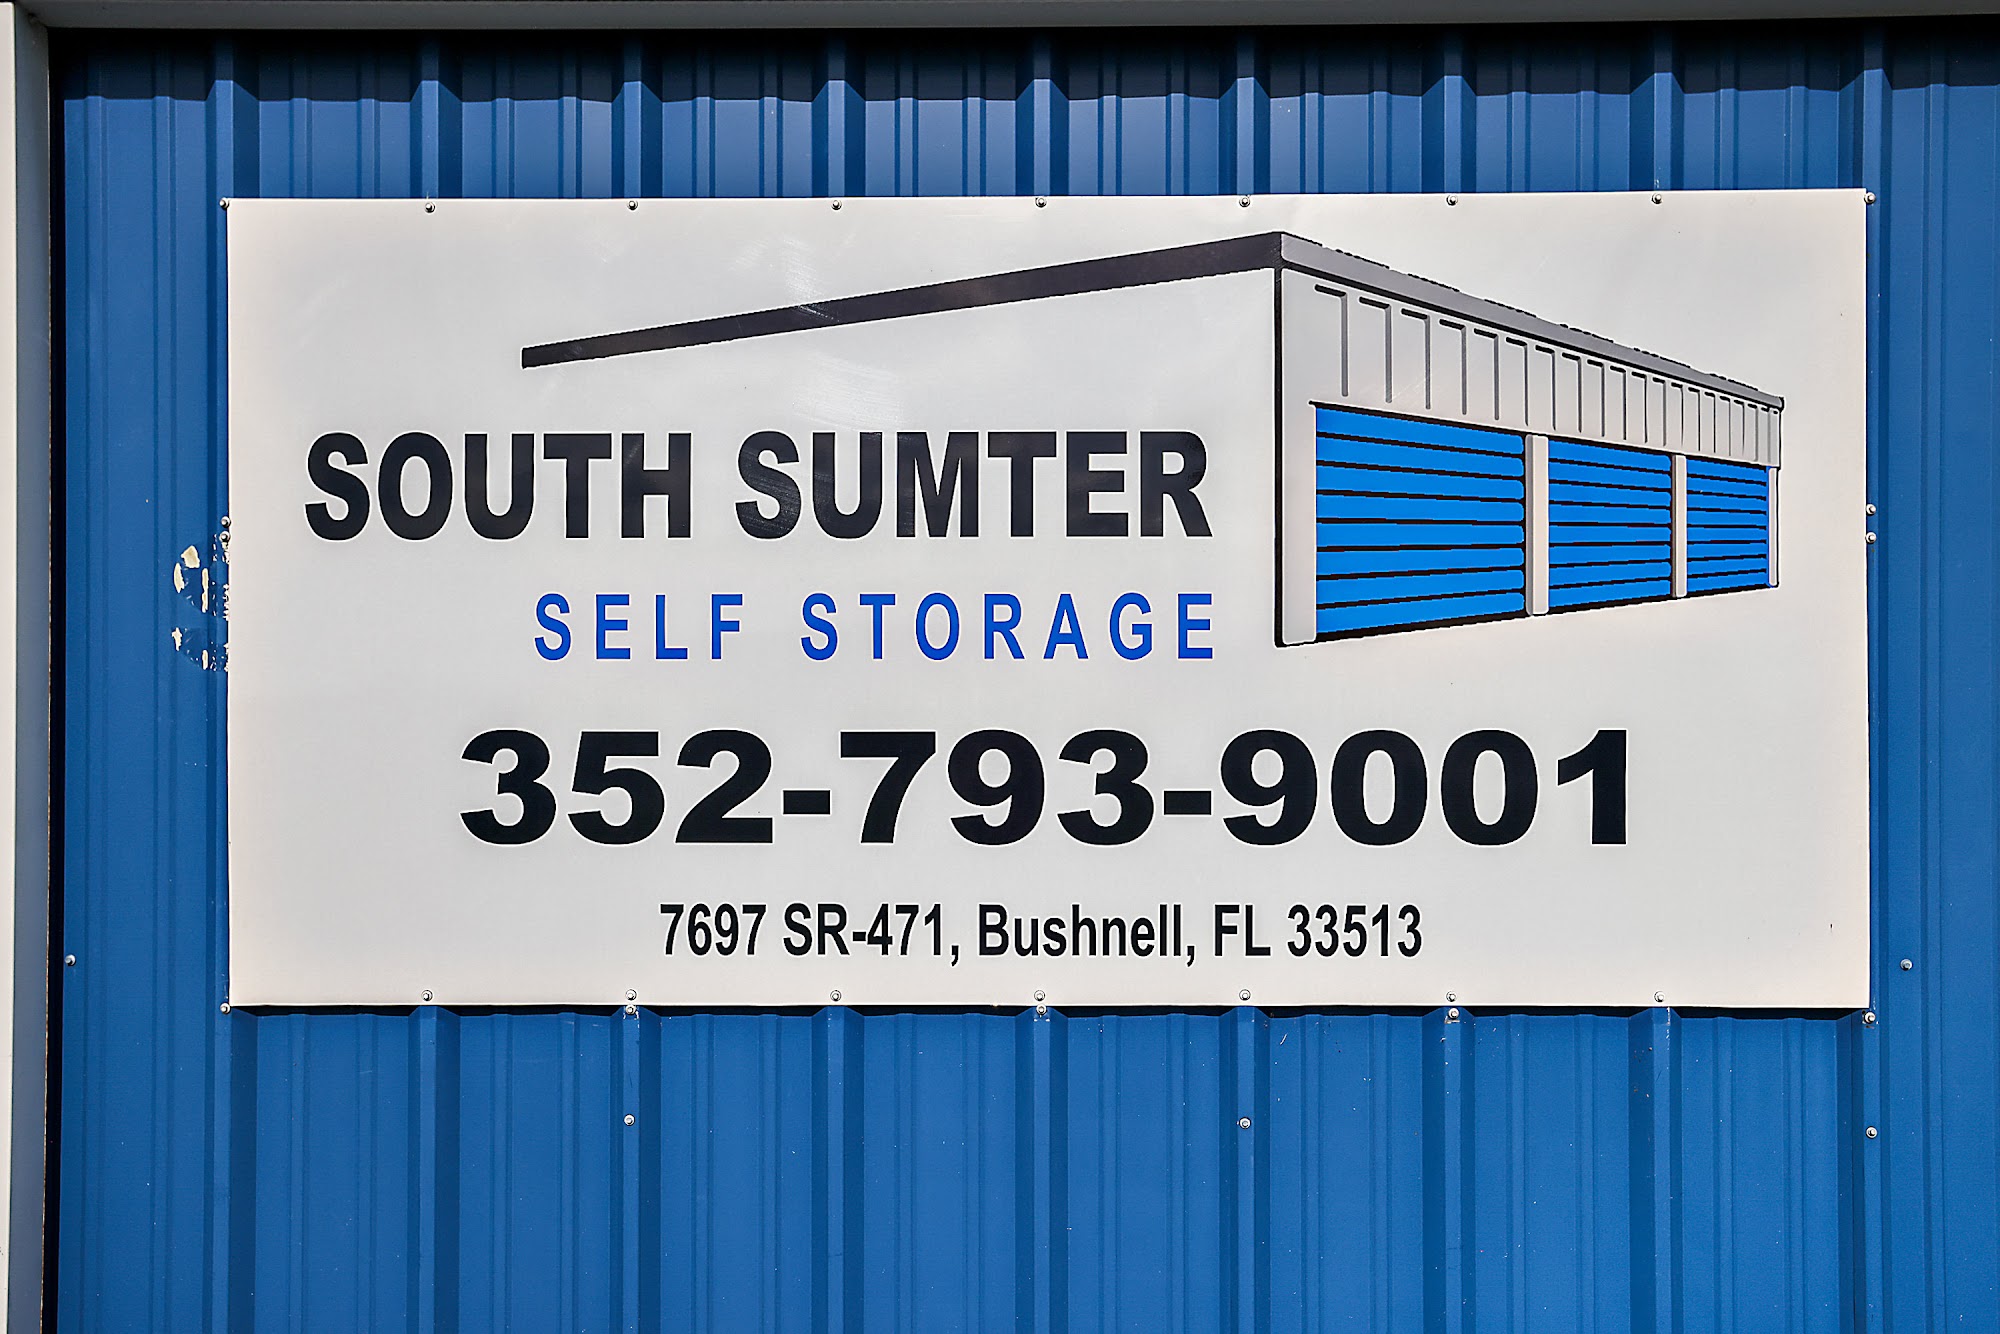 South Sumter Self Storage